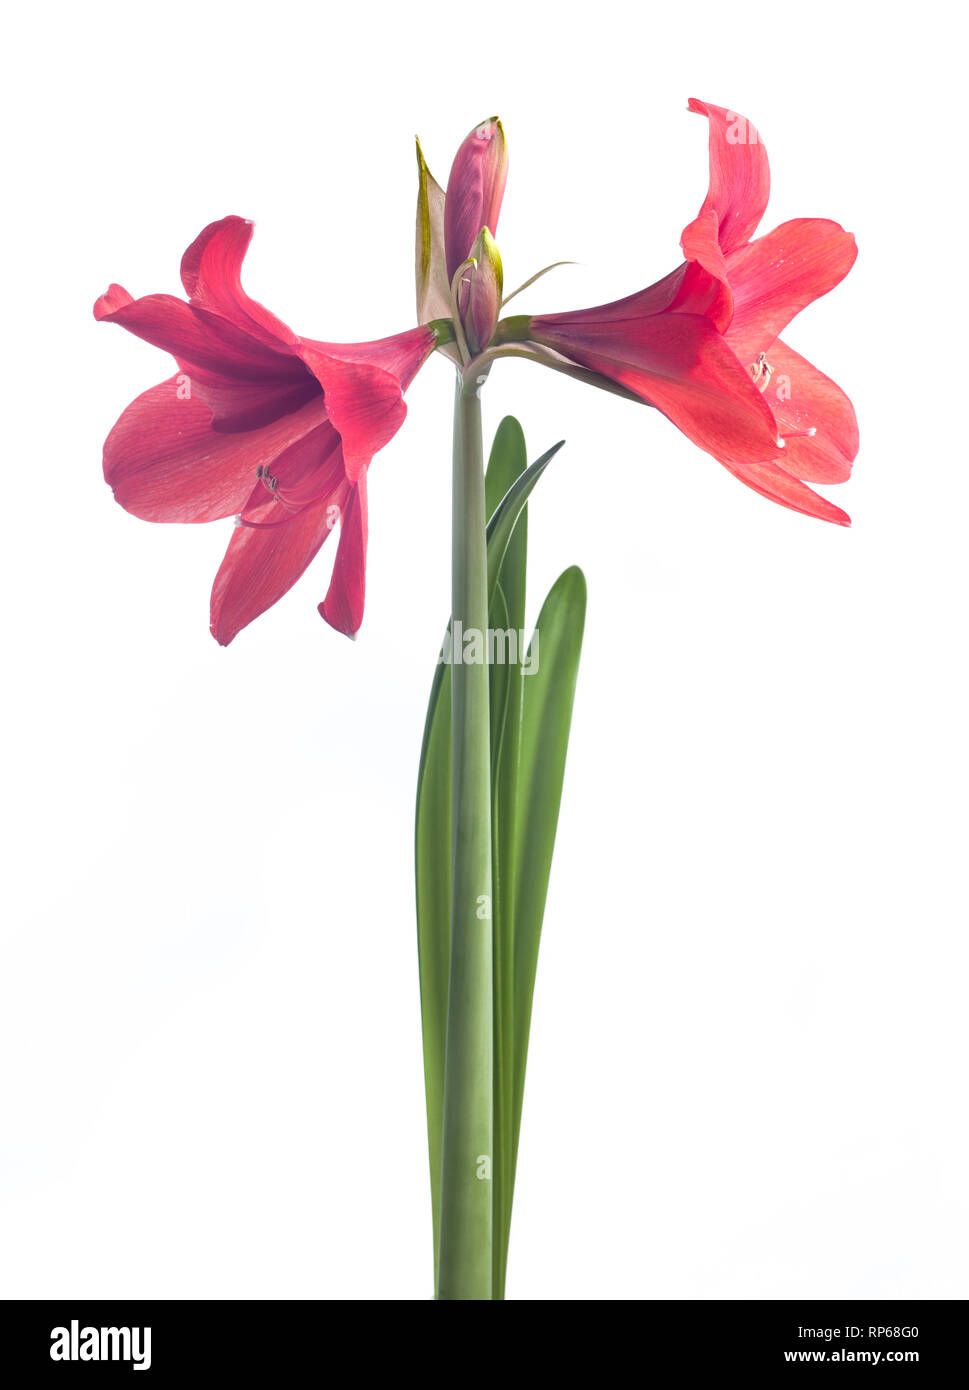 Red Amaryllis Flowers on Long Stem against White Background Stock Photo